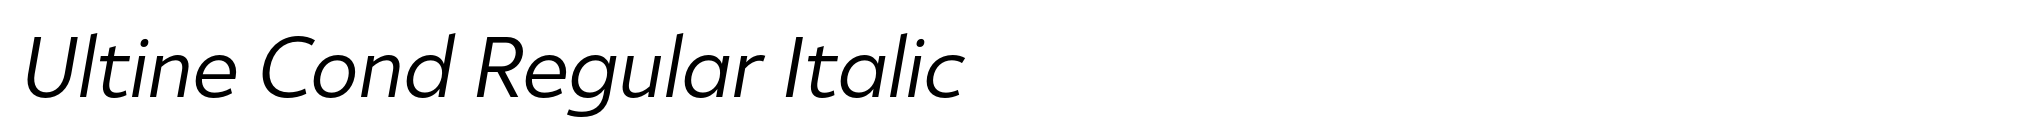 Ultine Cond Regular Italic image